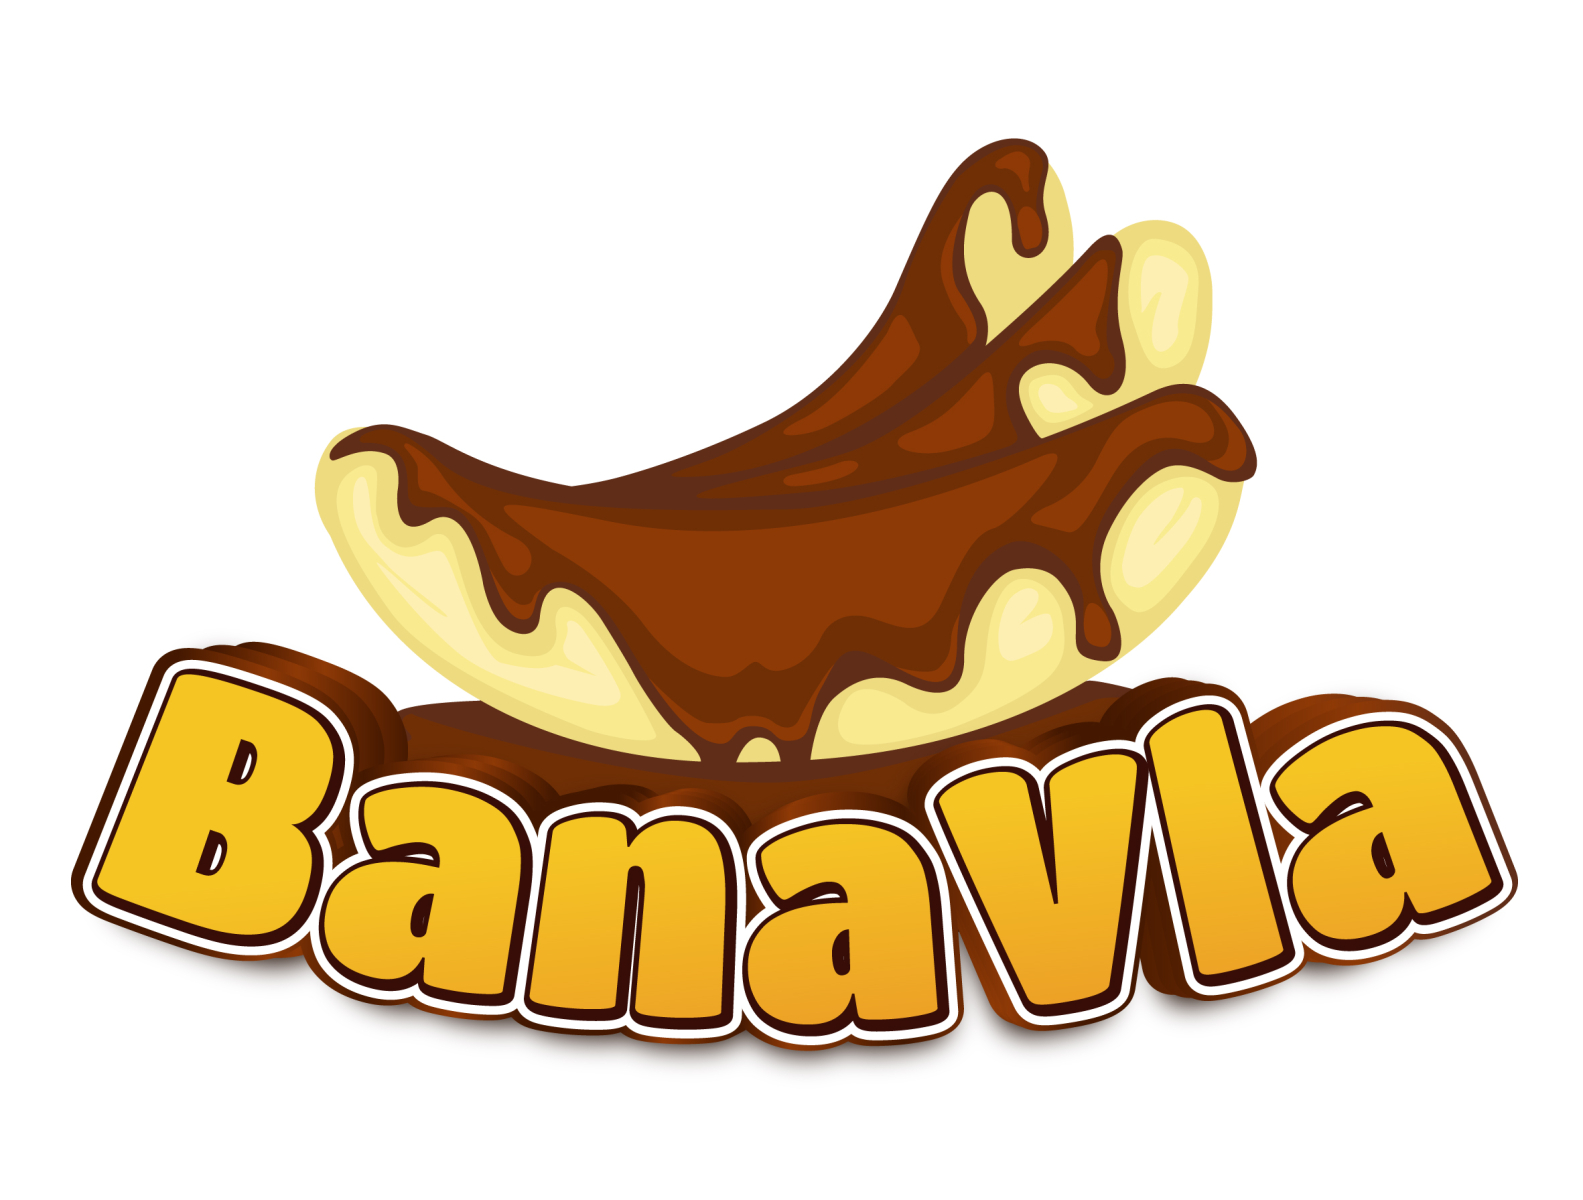 Logo Banavla by Zul Stepeng on Dribbble